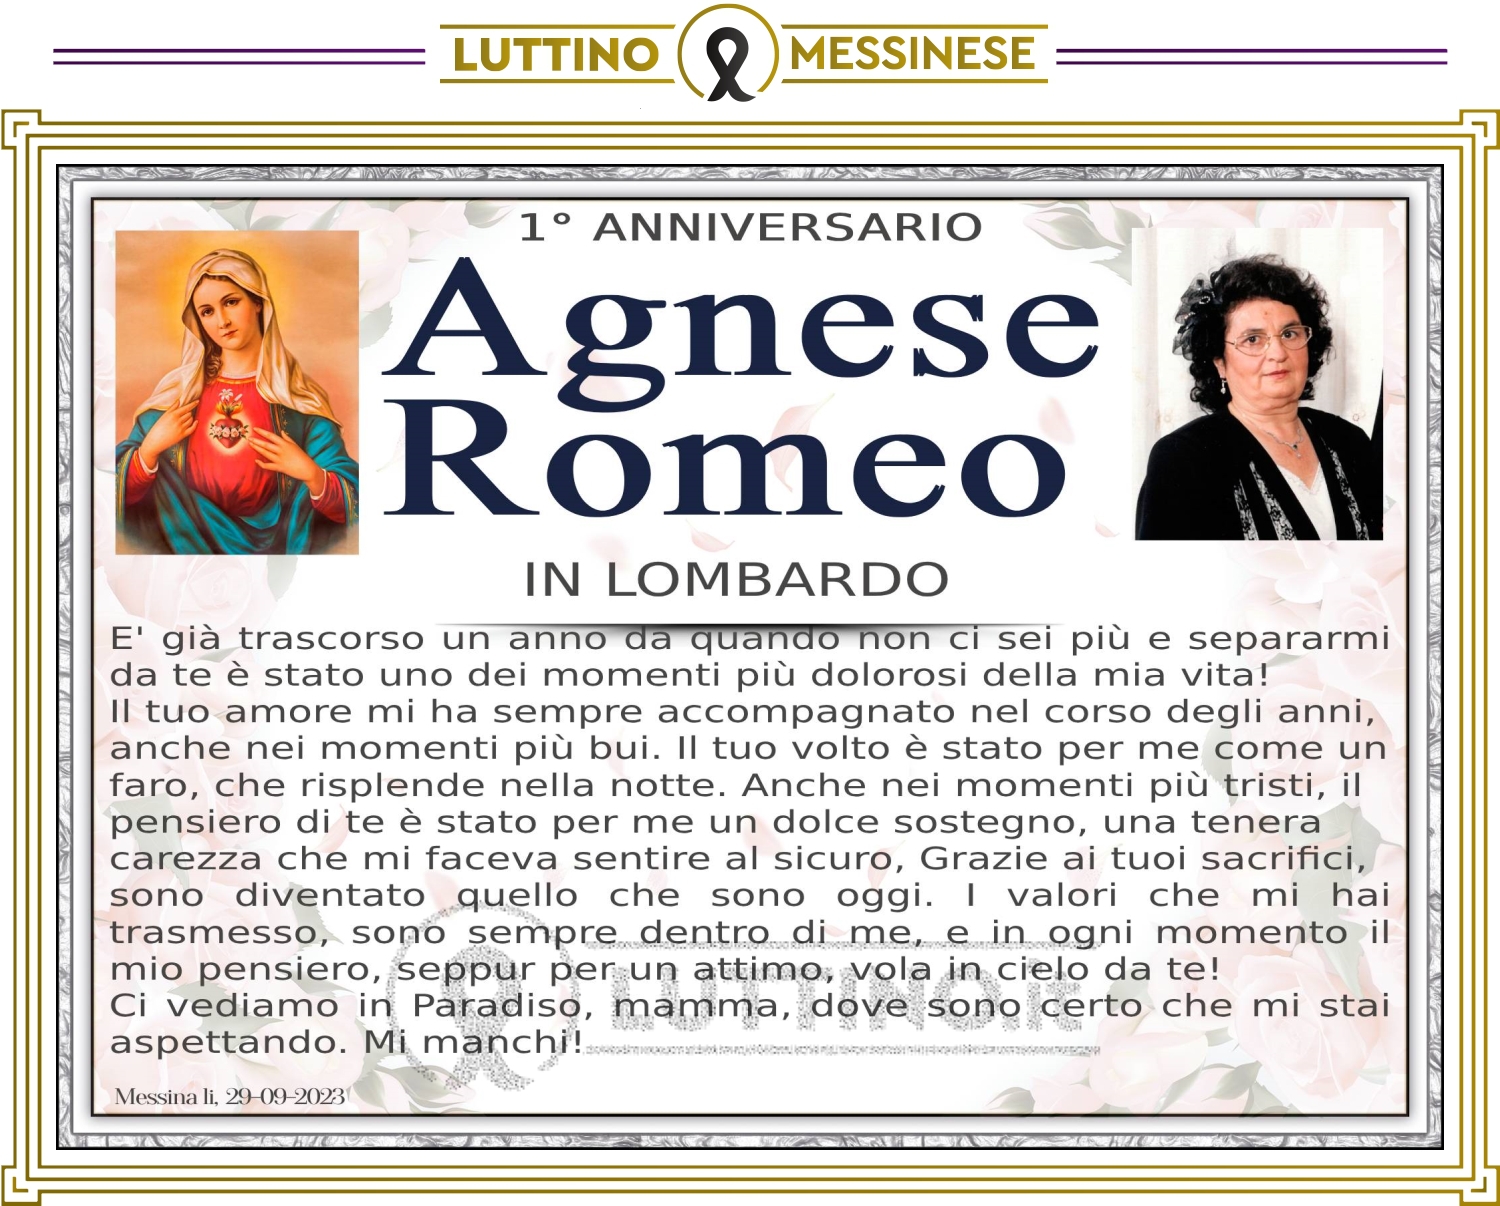 Agnese Romeo